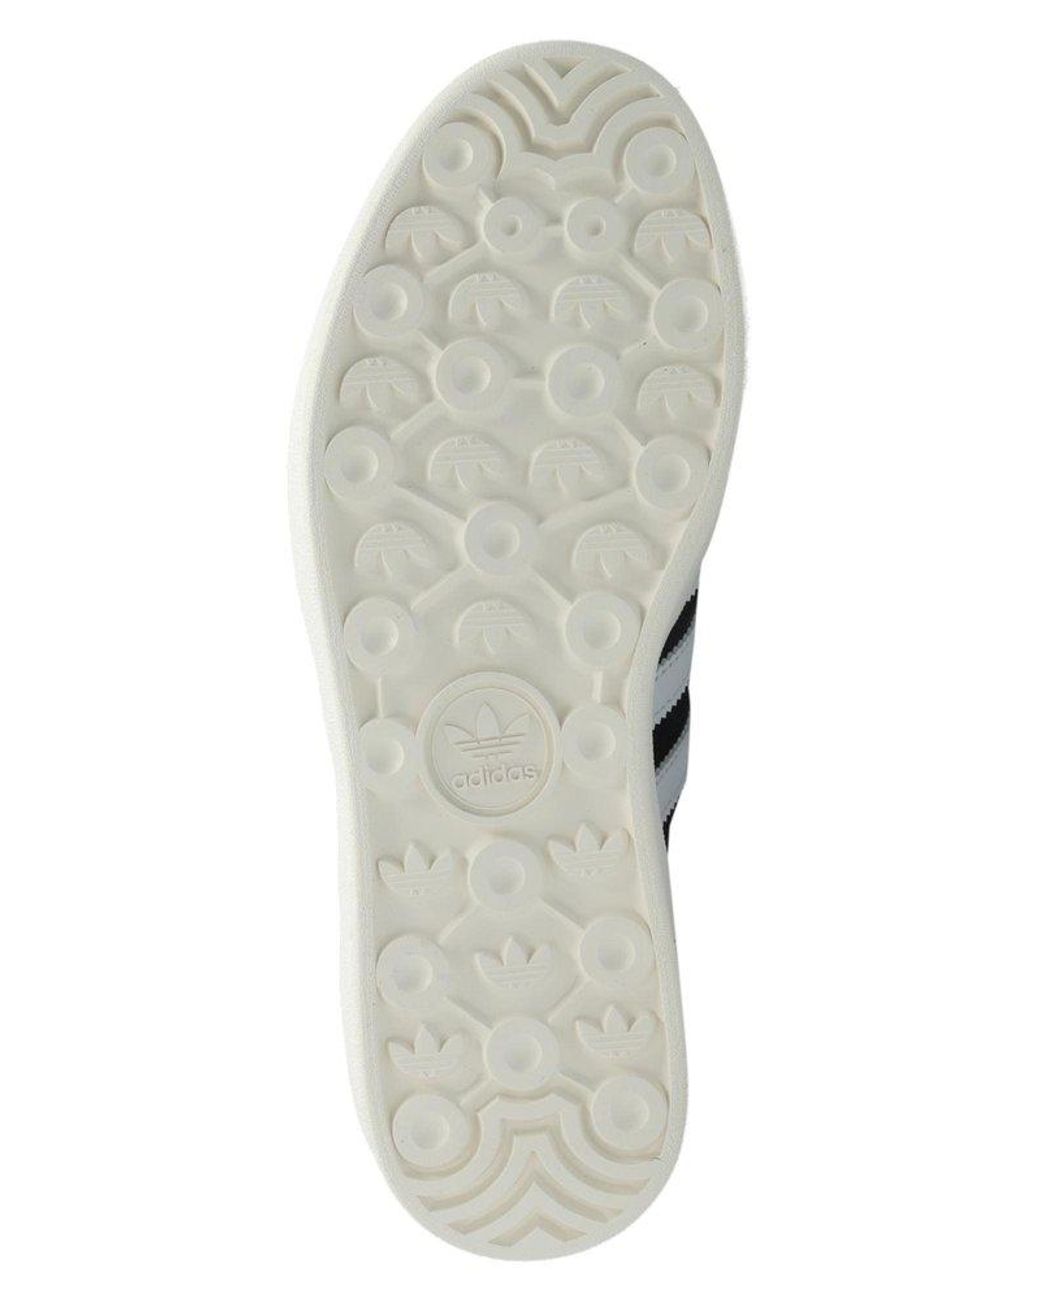 adidas Originals Gazelle Bold Lace-up Platform Sneakers in Black | Lyst